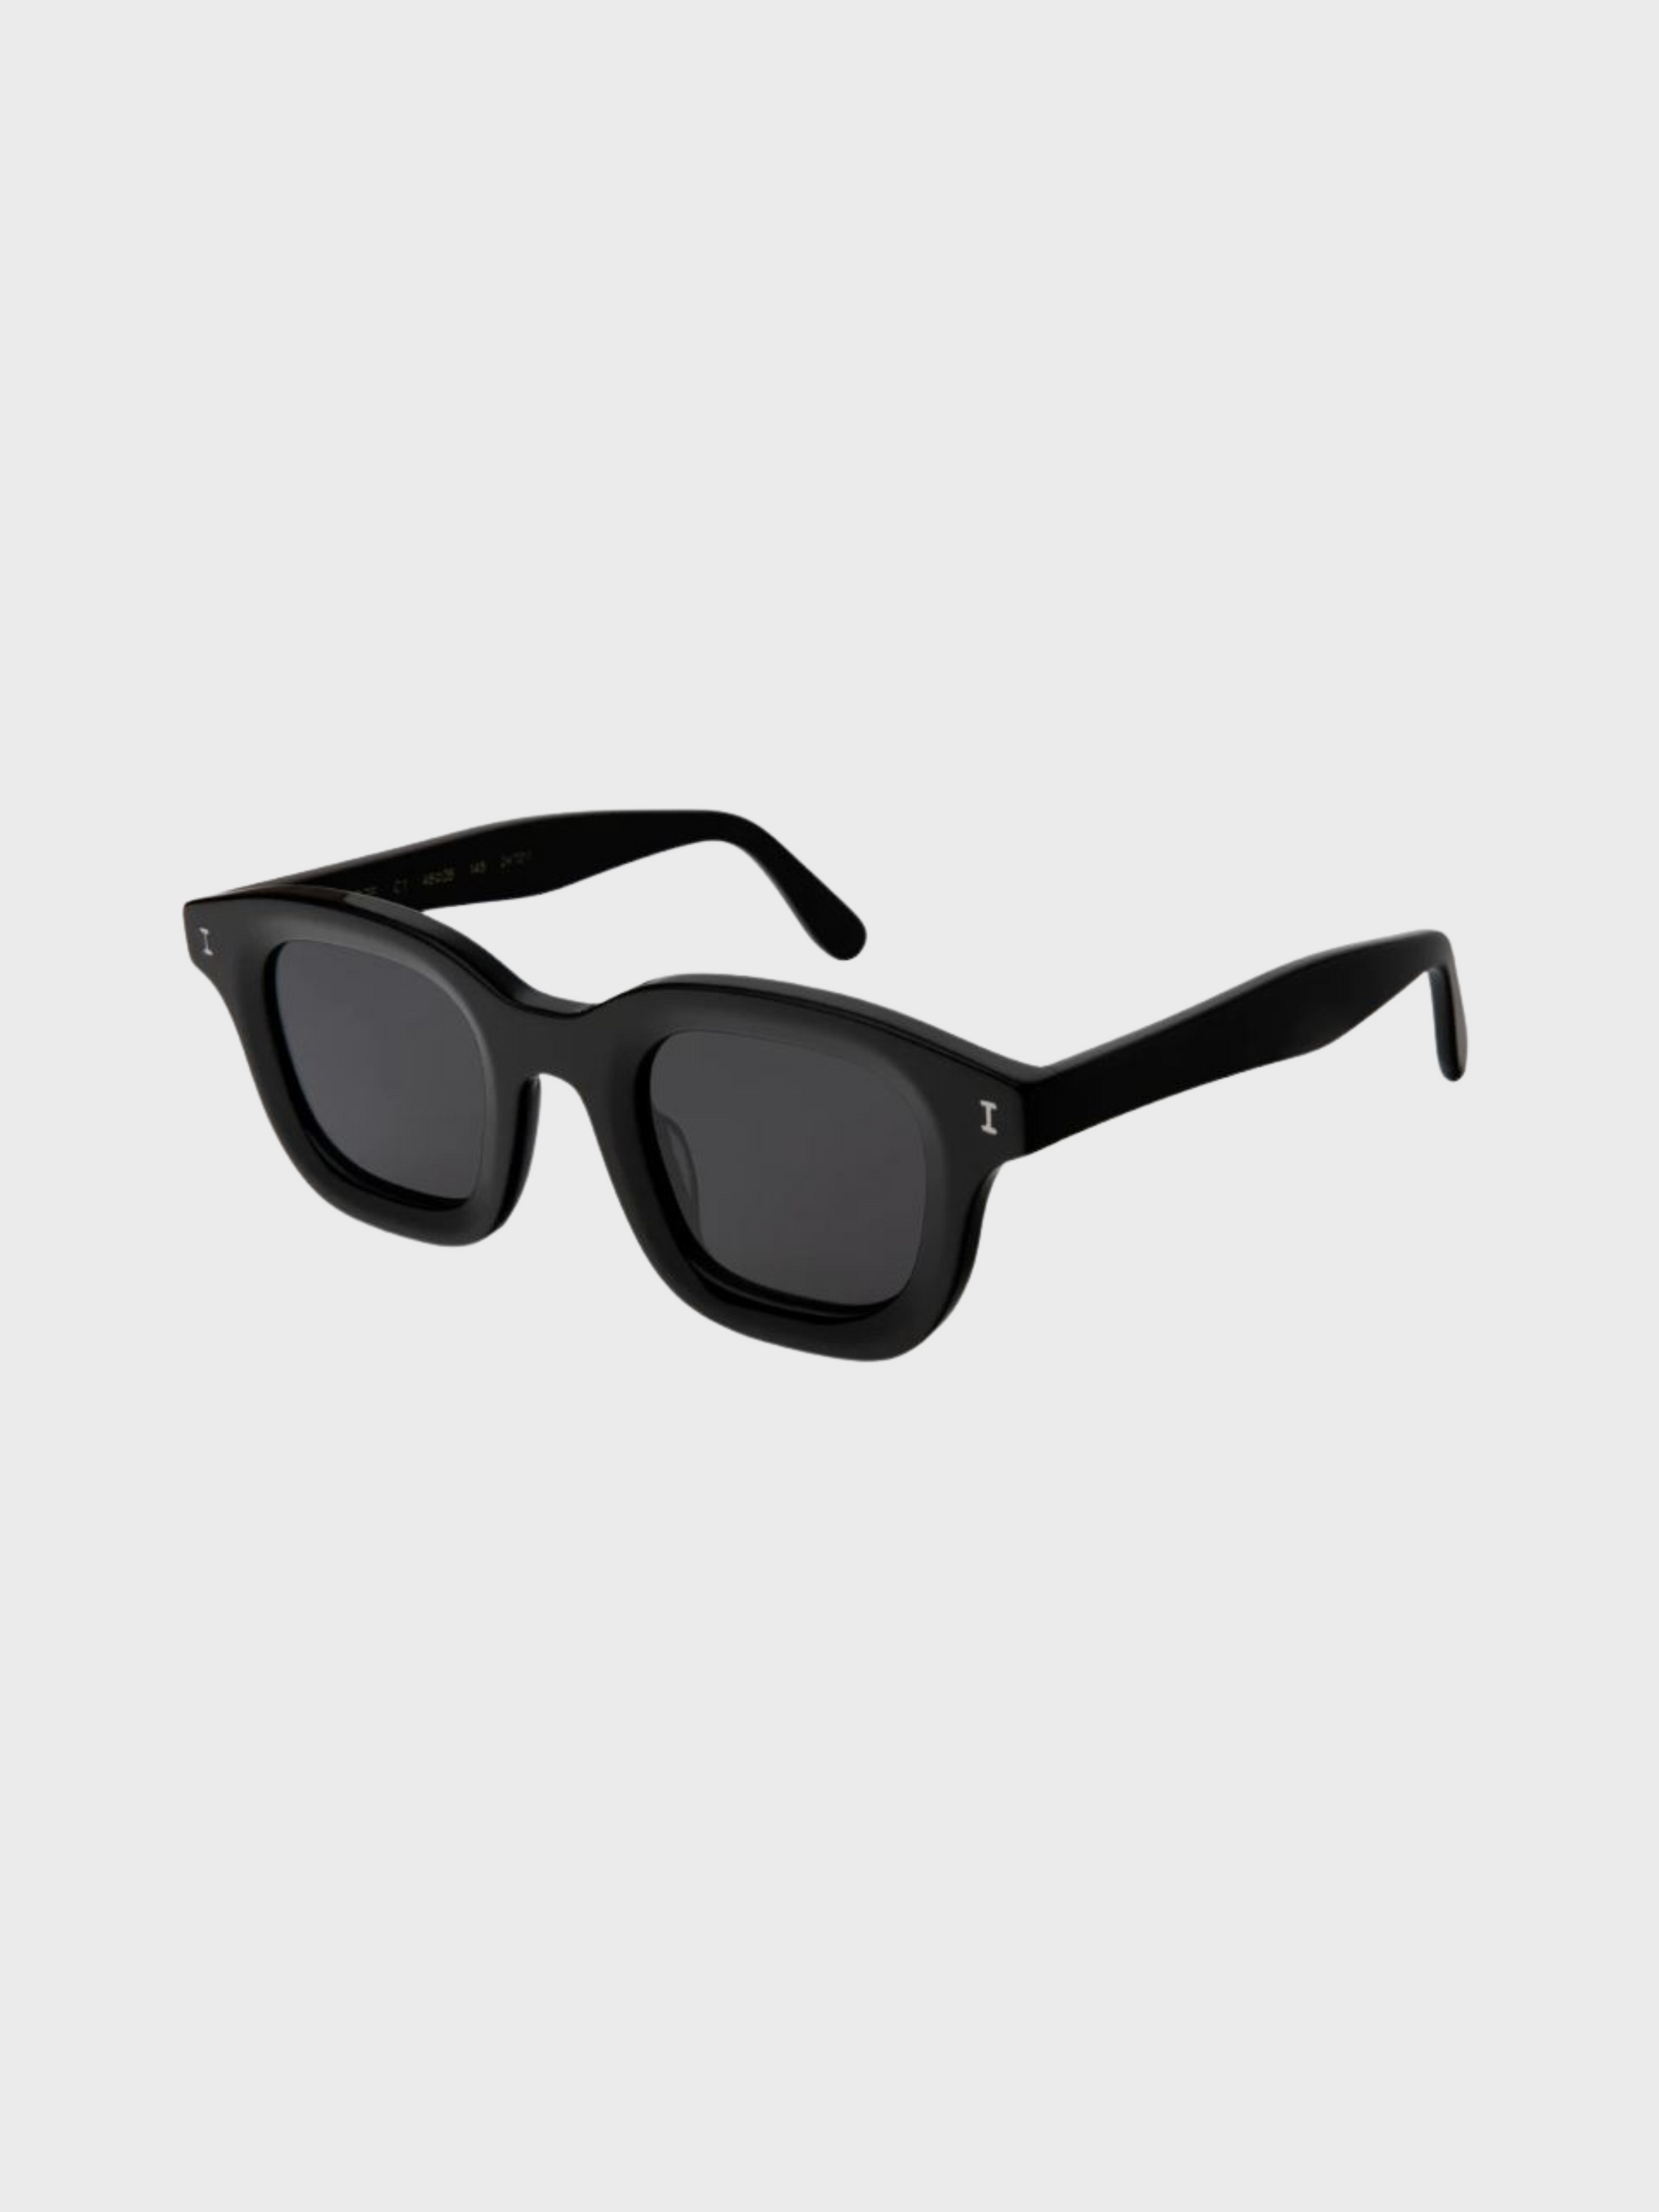 Illesteva George Black Grey Flat Lense Sunglasses-Accessories-West of Woodward Boutique-Vancouver-Canada